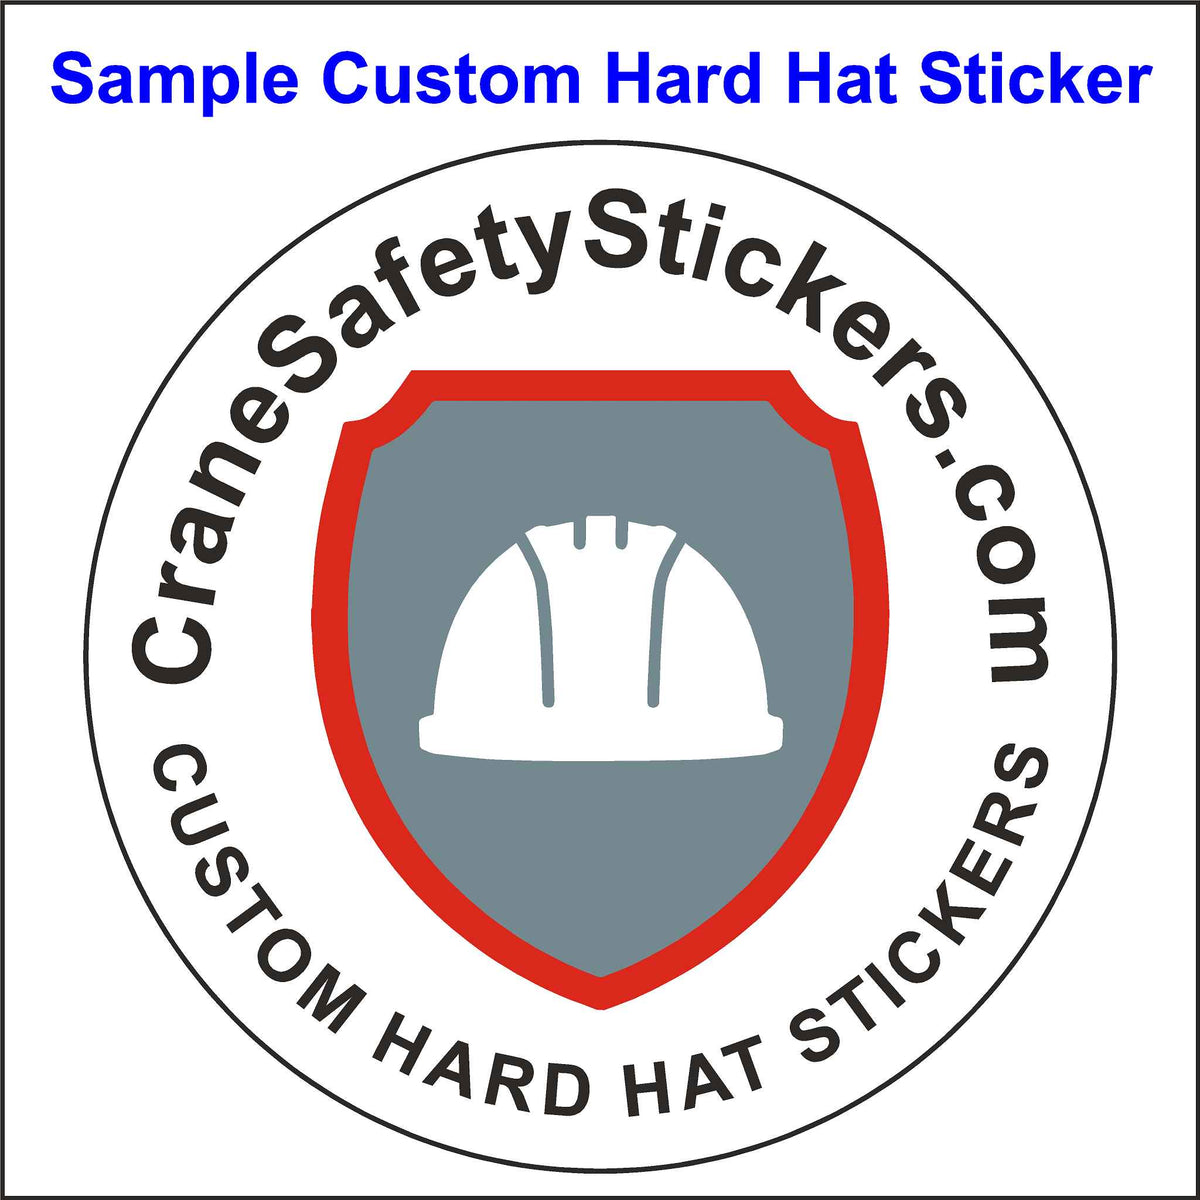 Sample of a Custom Hard Hat Sticker.